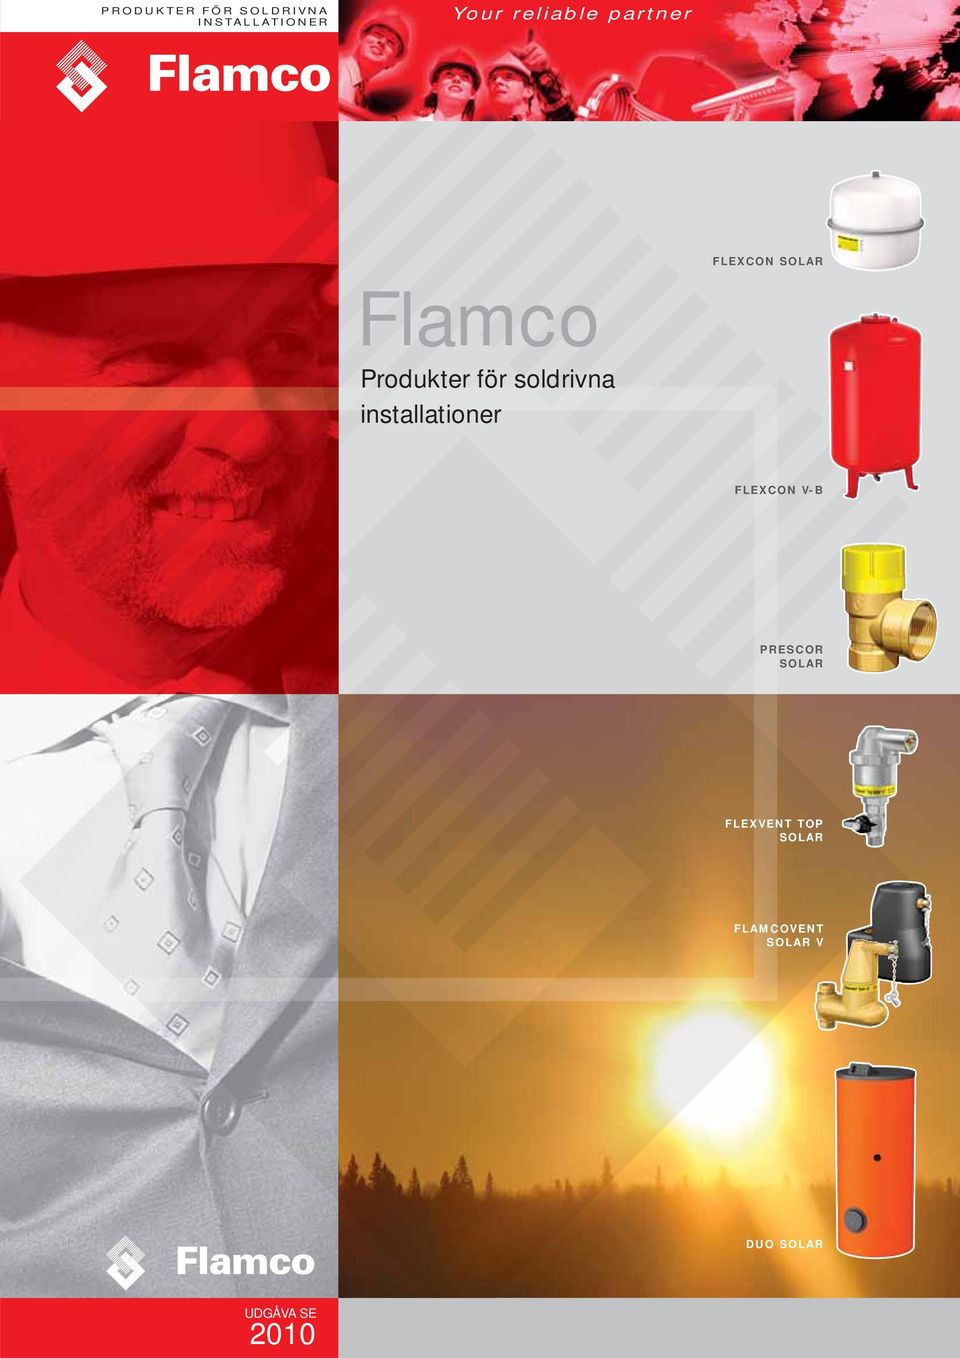 installationer FLEXCON SOLR FLEXCON V- PRESCOR